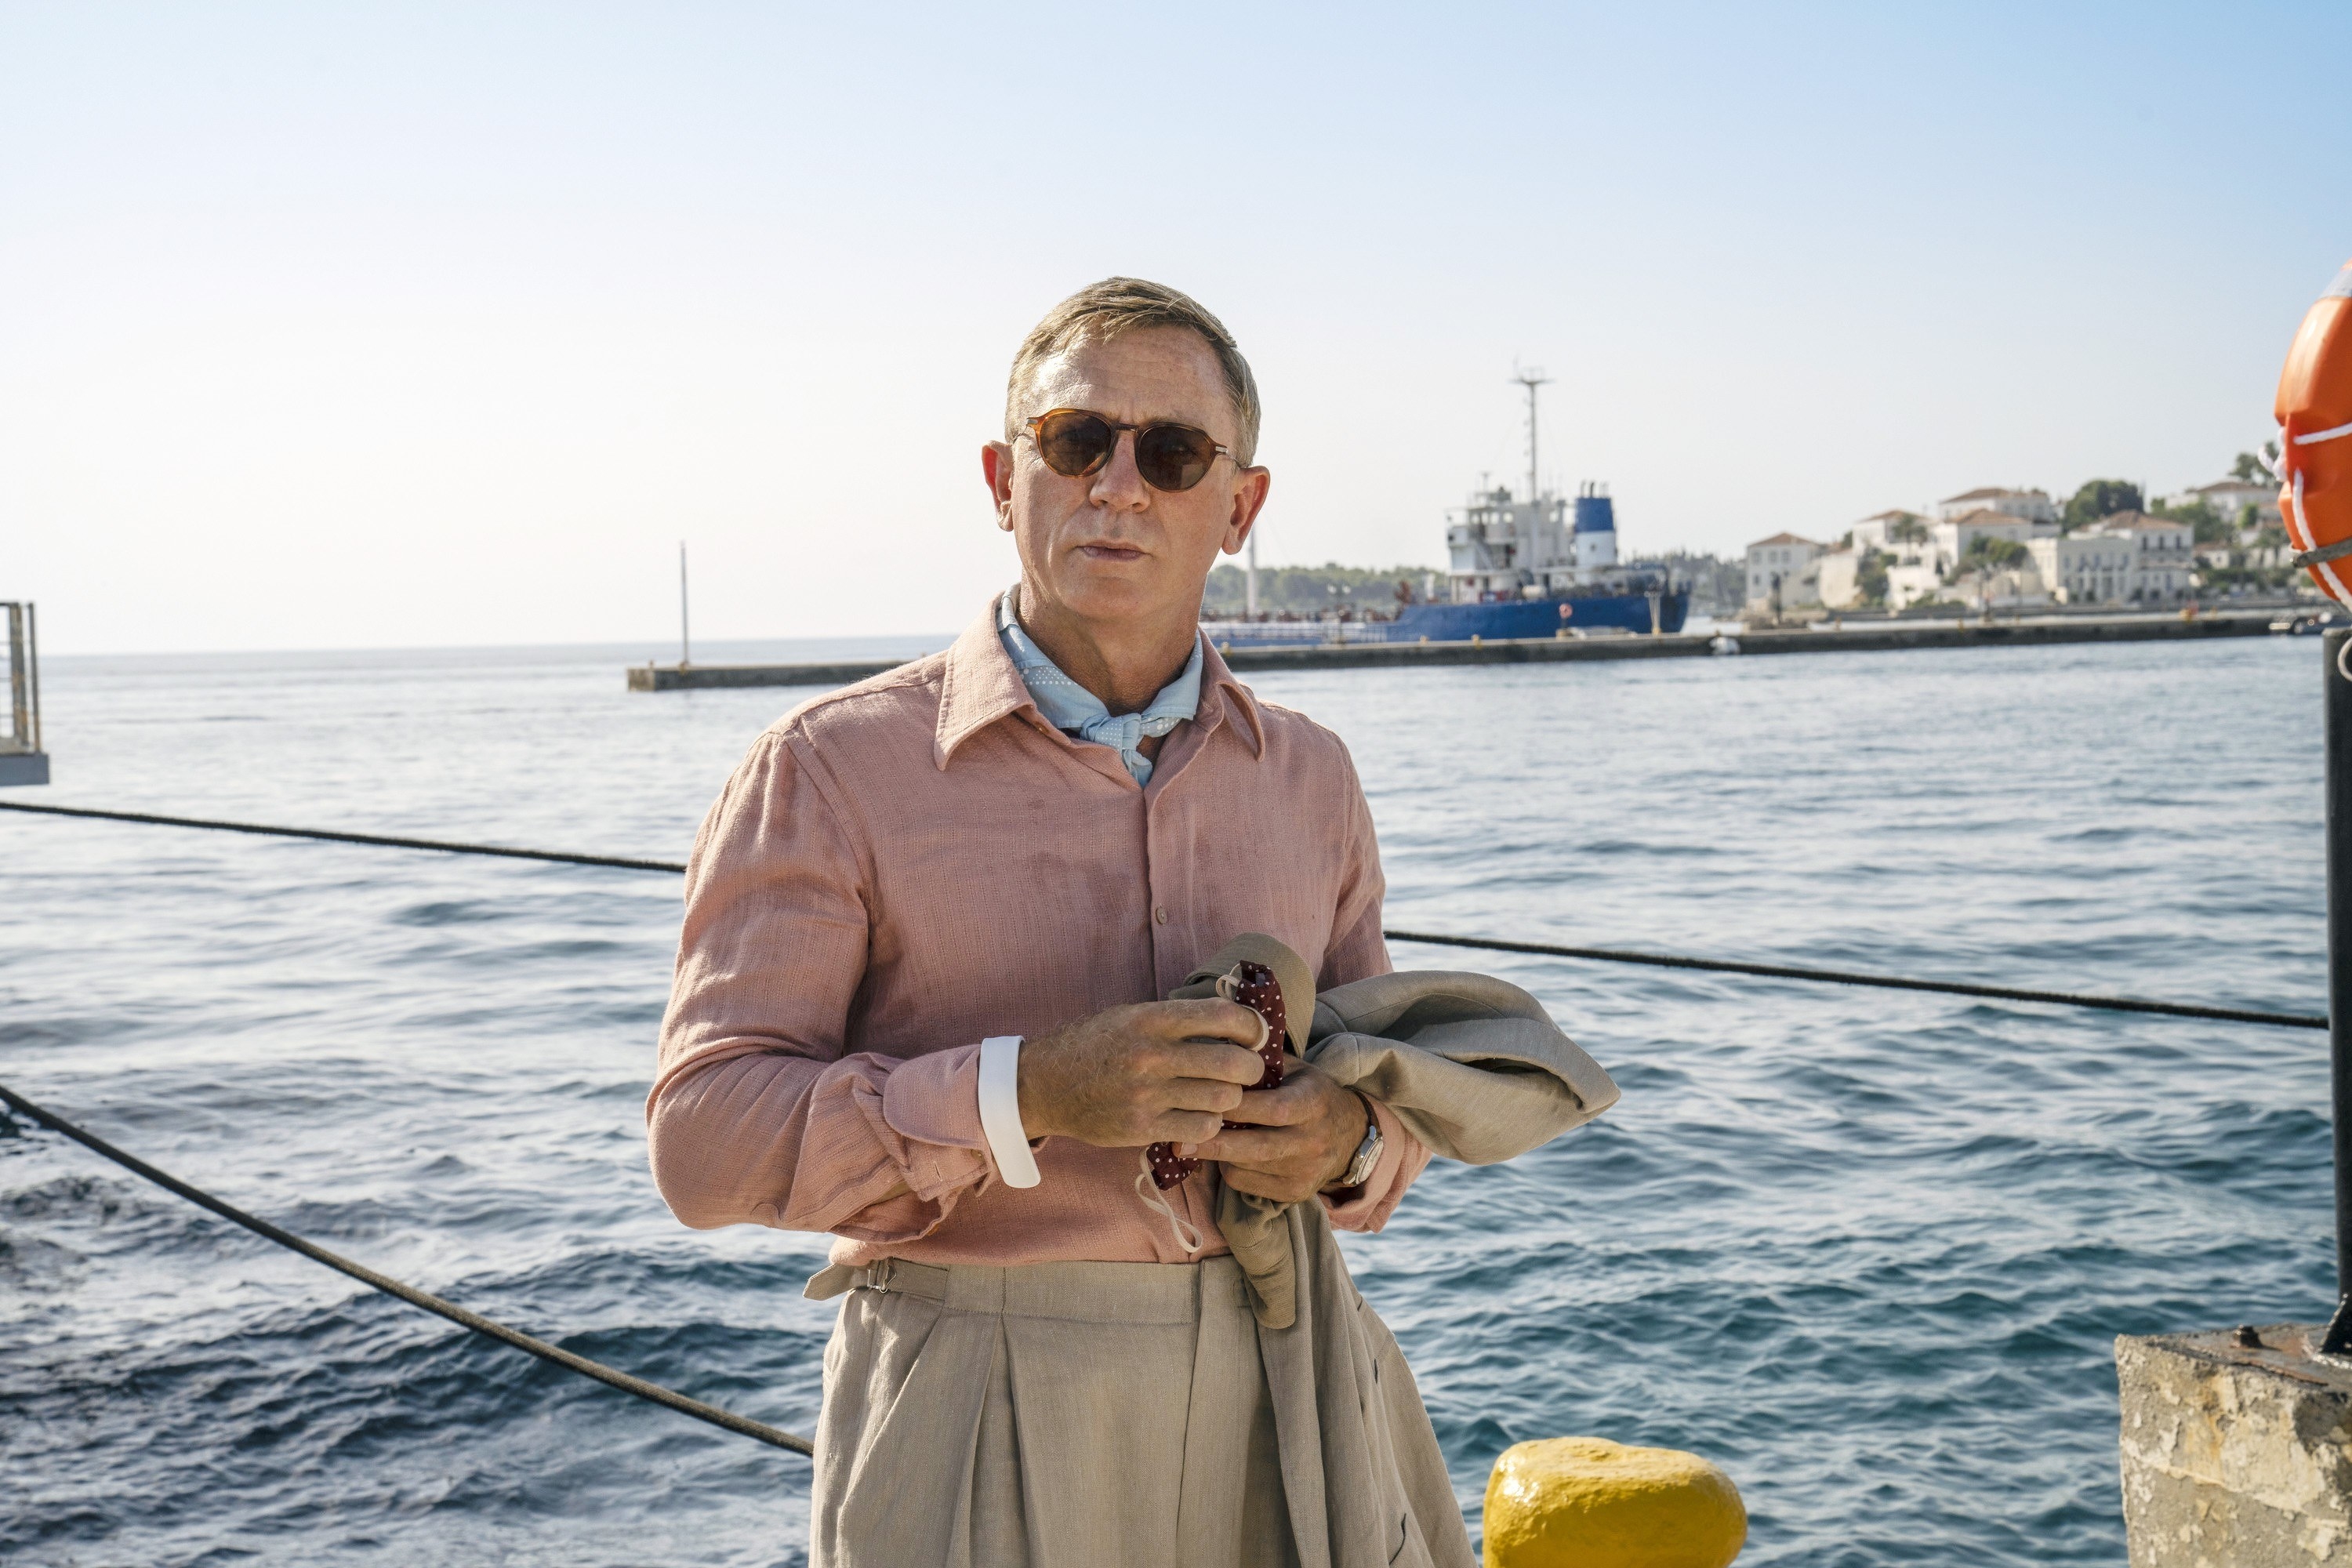 Daniel Craig stands on a boat dock